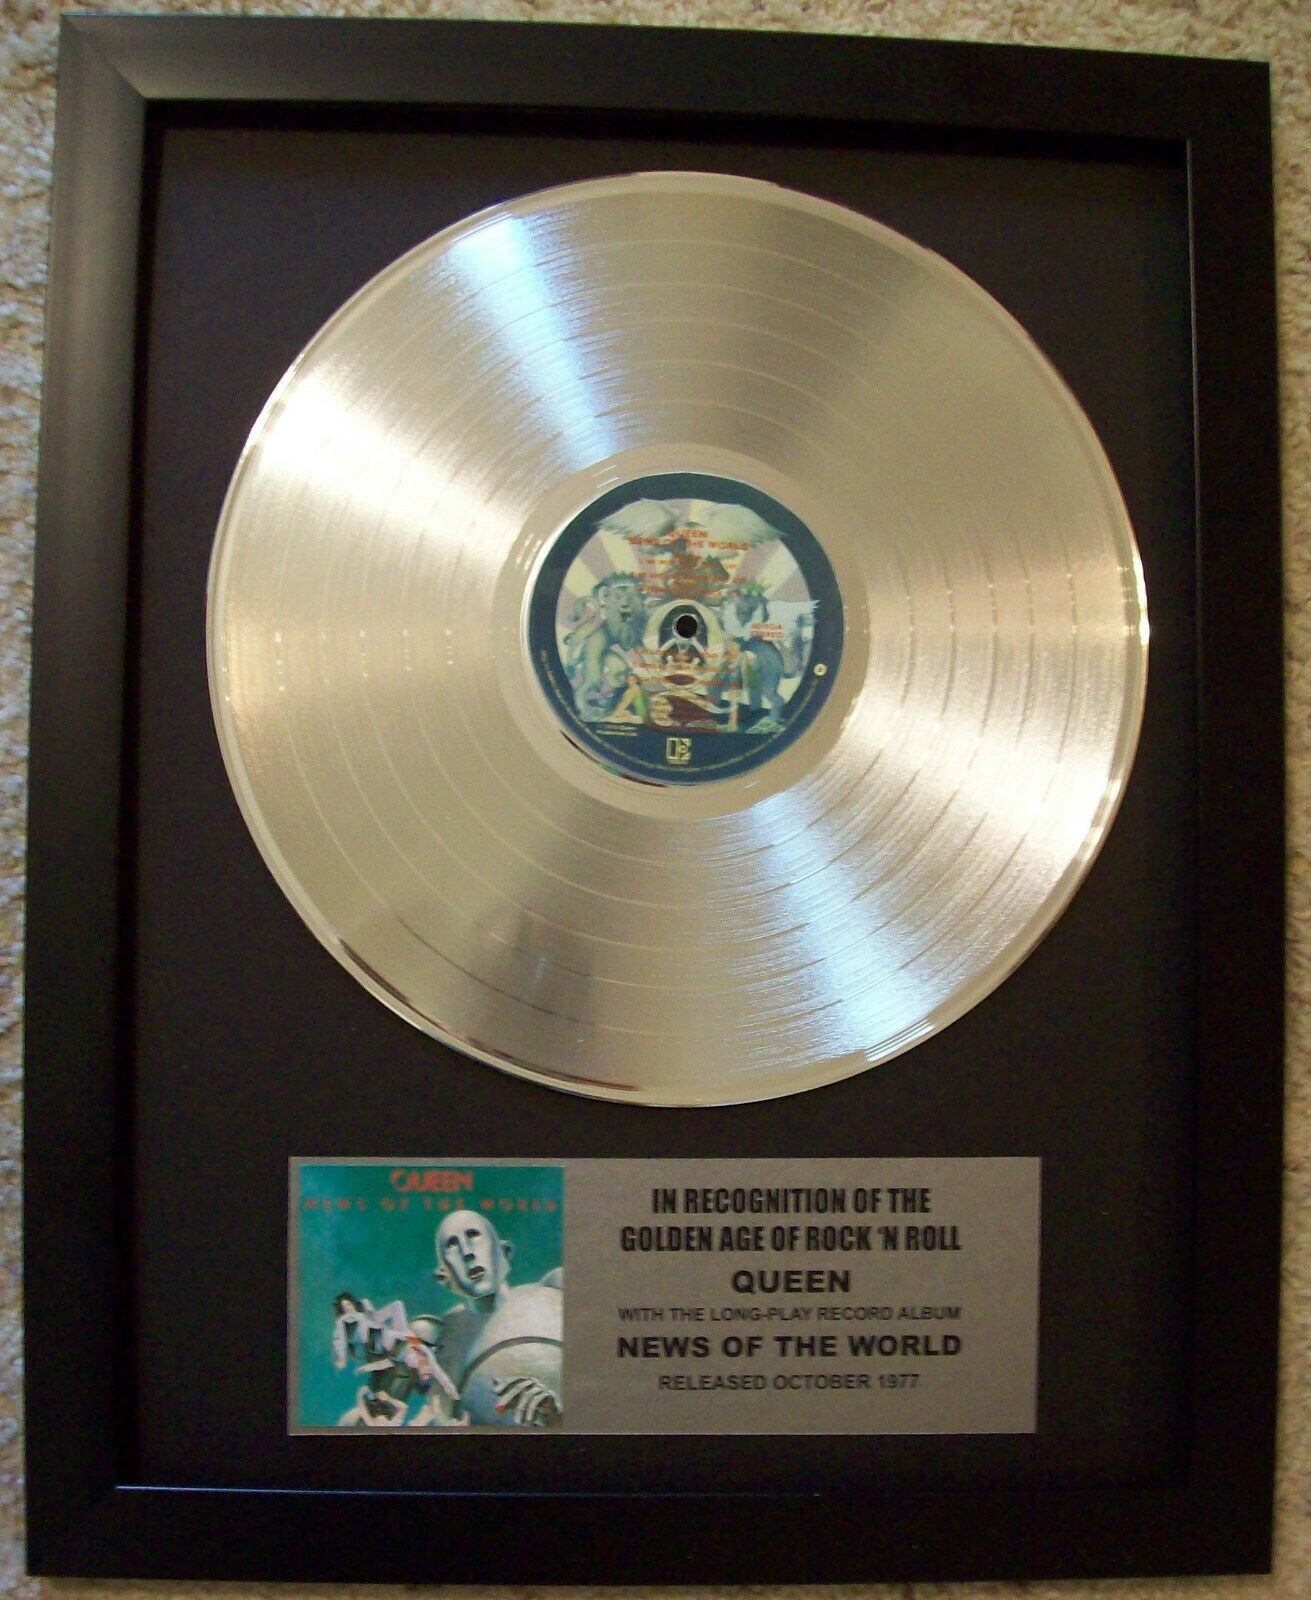 Queen News Of The World Platinum White Gold Lp Record + Mini Album Disc